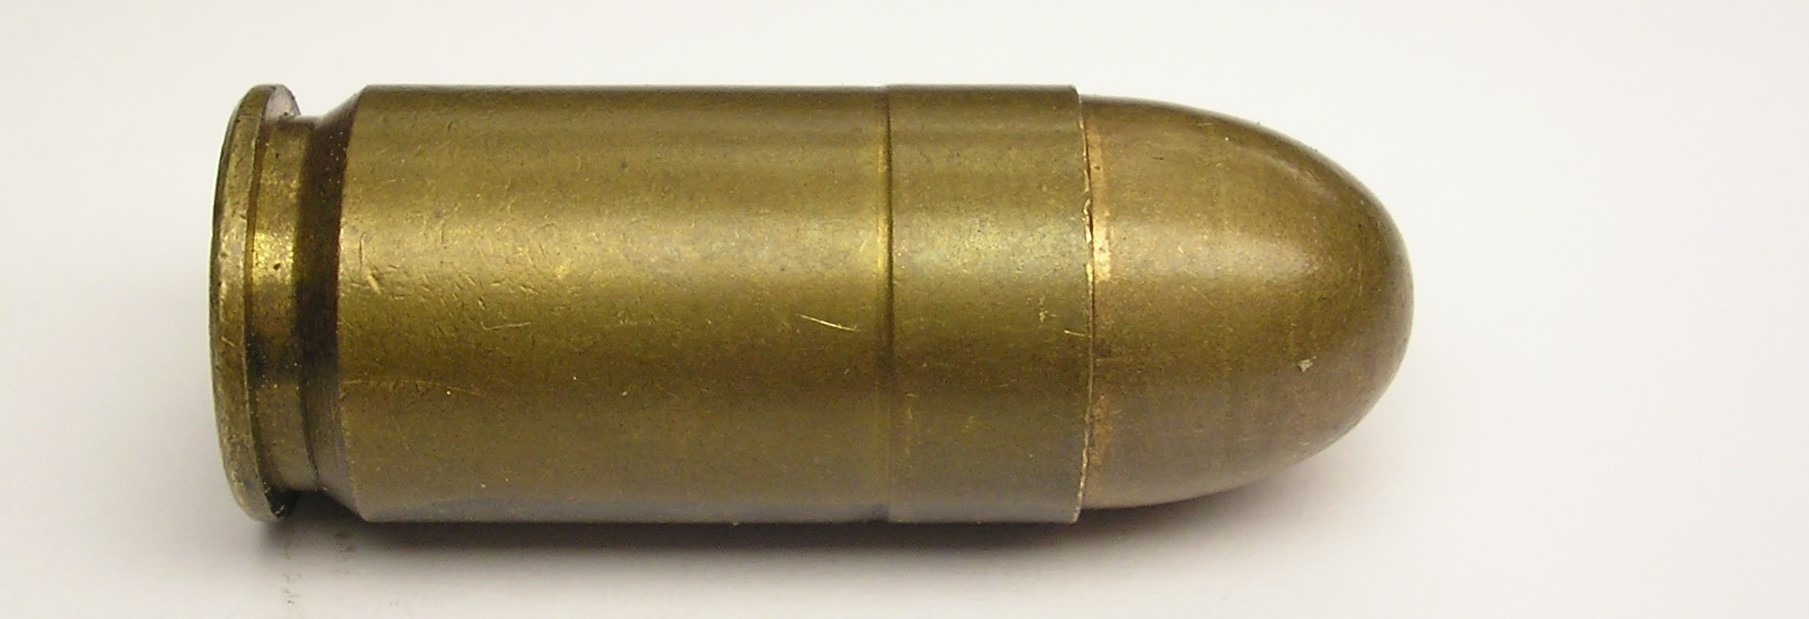 ./ammo/1125/patroner/Patron-1125-helmantel-1916-1.JPG